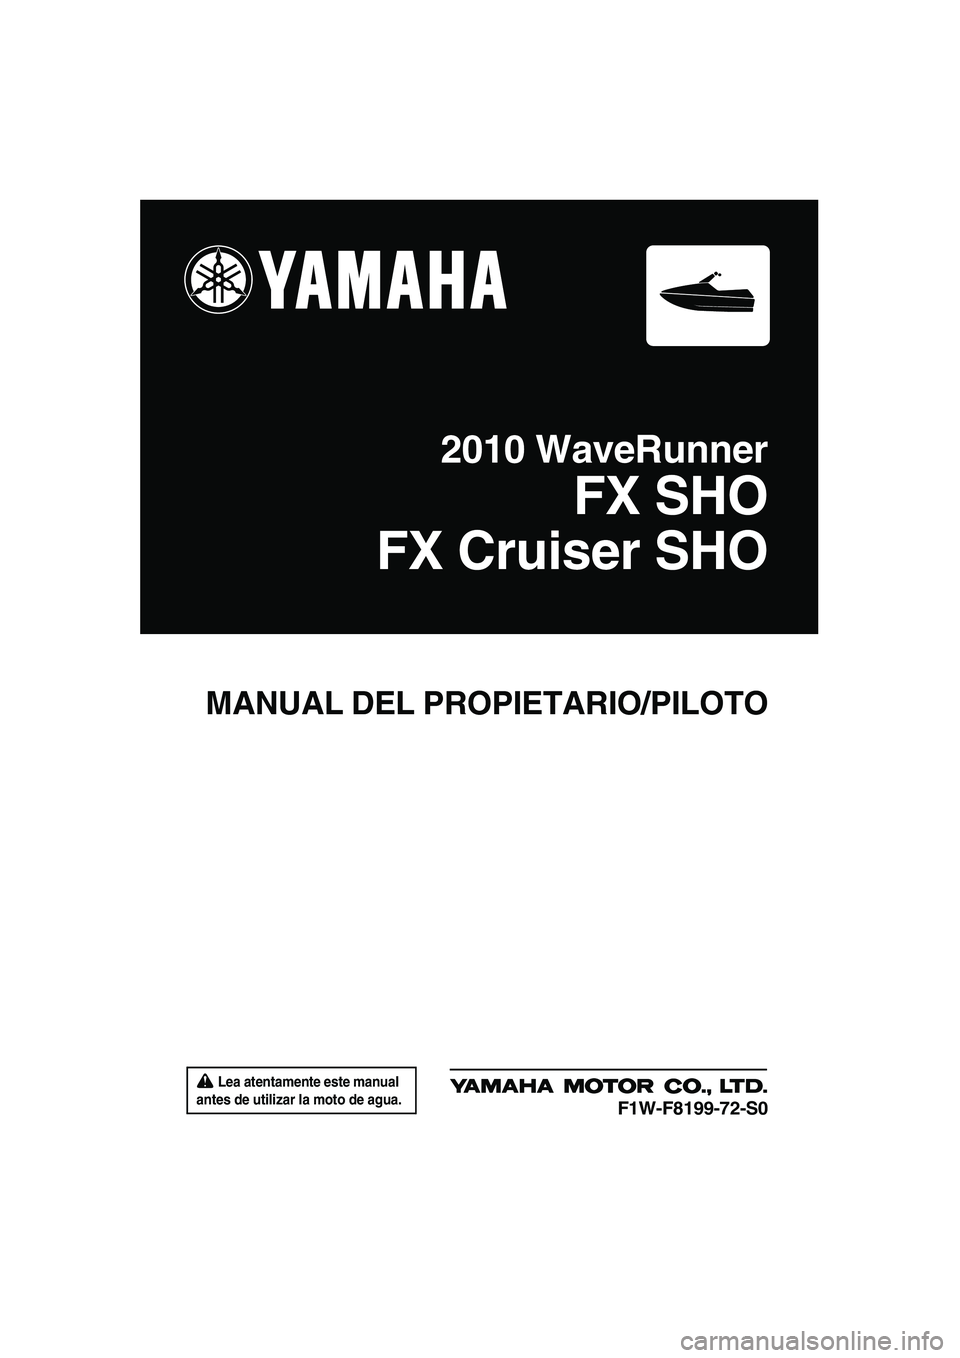 YAMAHA FX SHO 2010  Manuale de Empleo (in Spanish) 